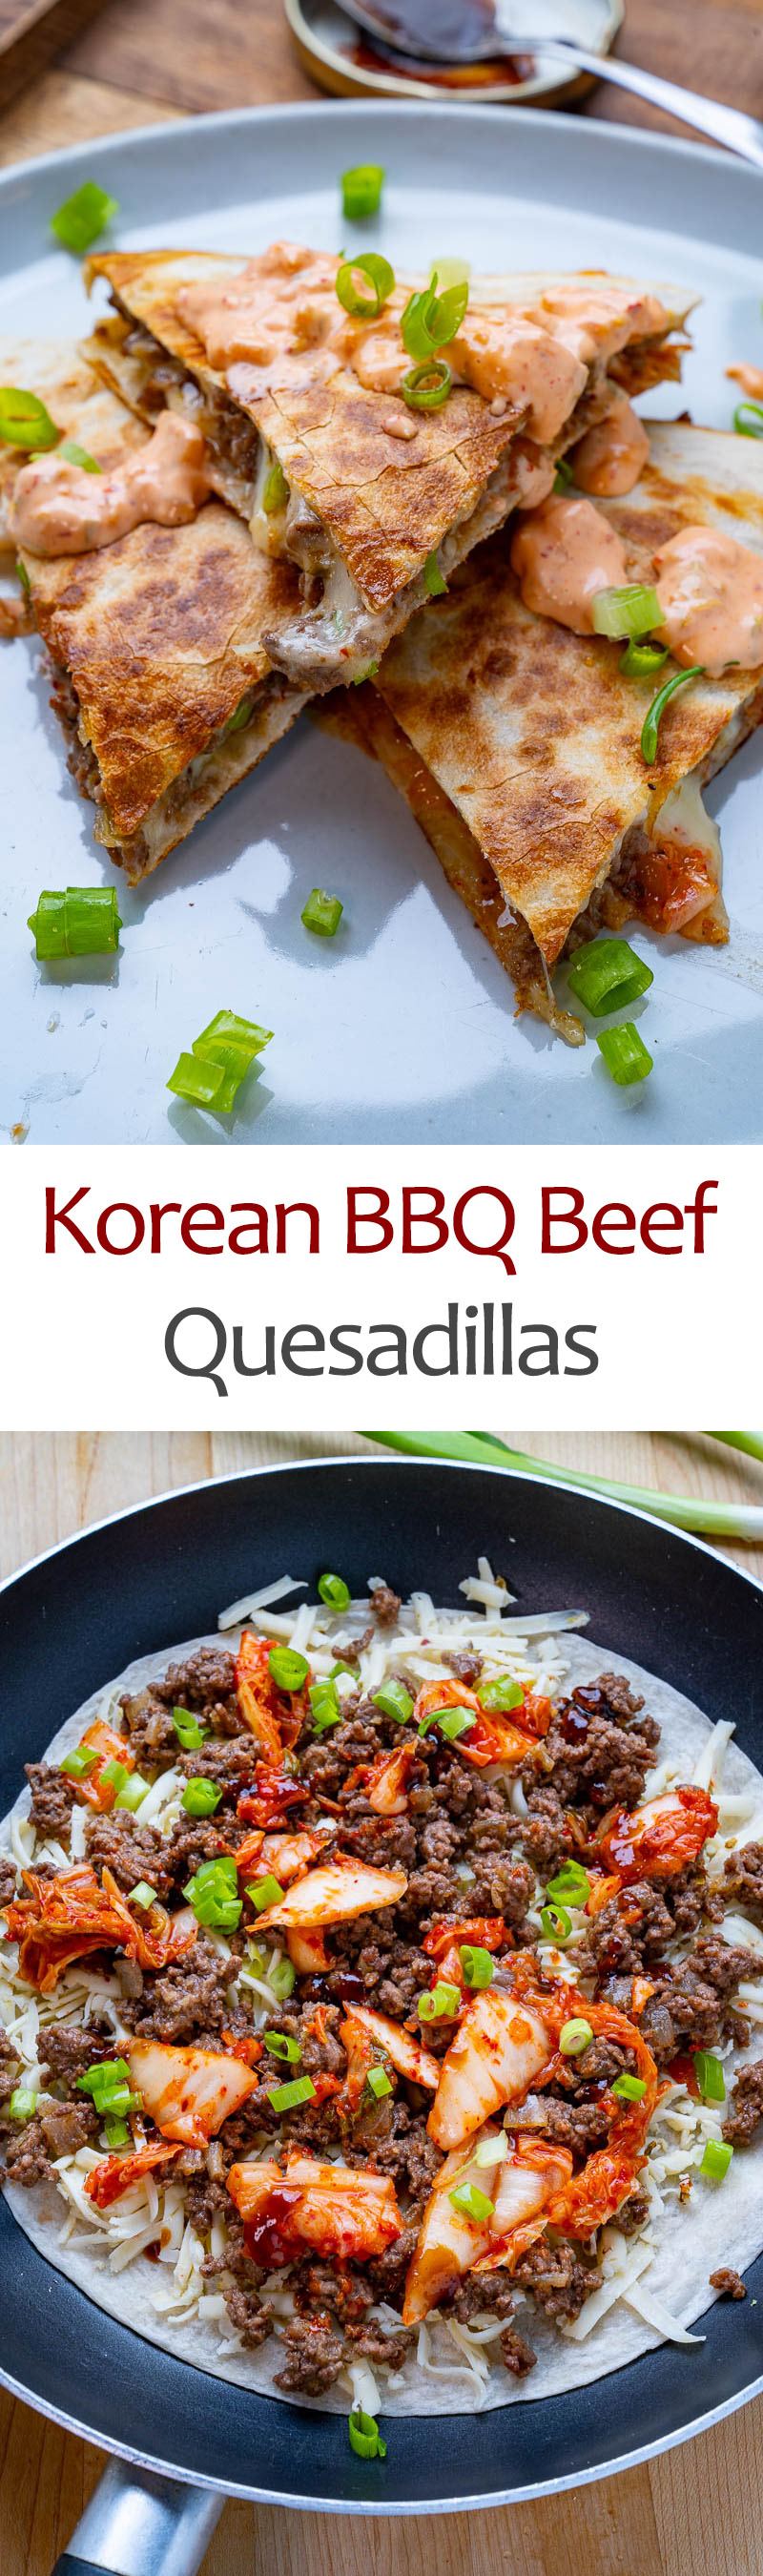 Korean BBQ Beef Quesadillas